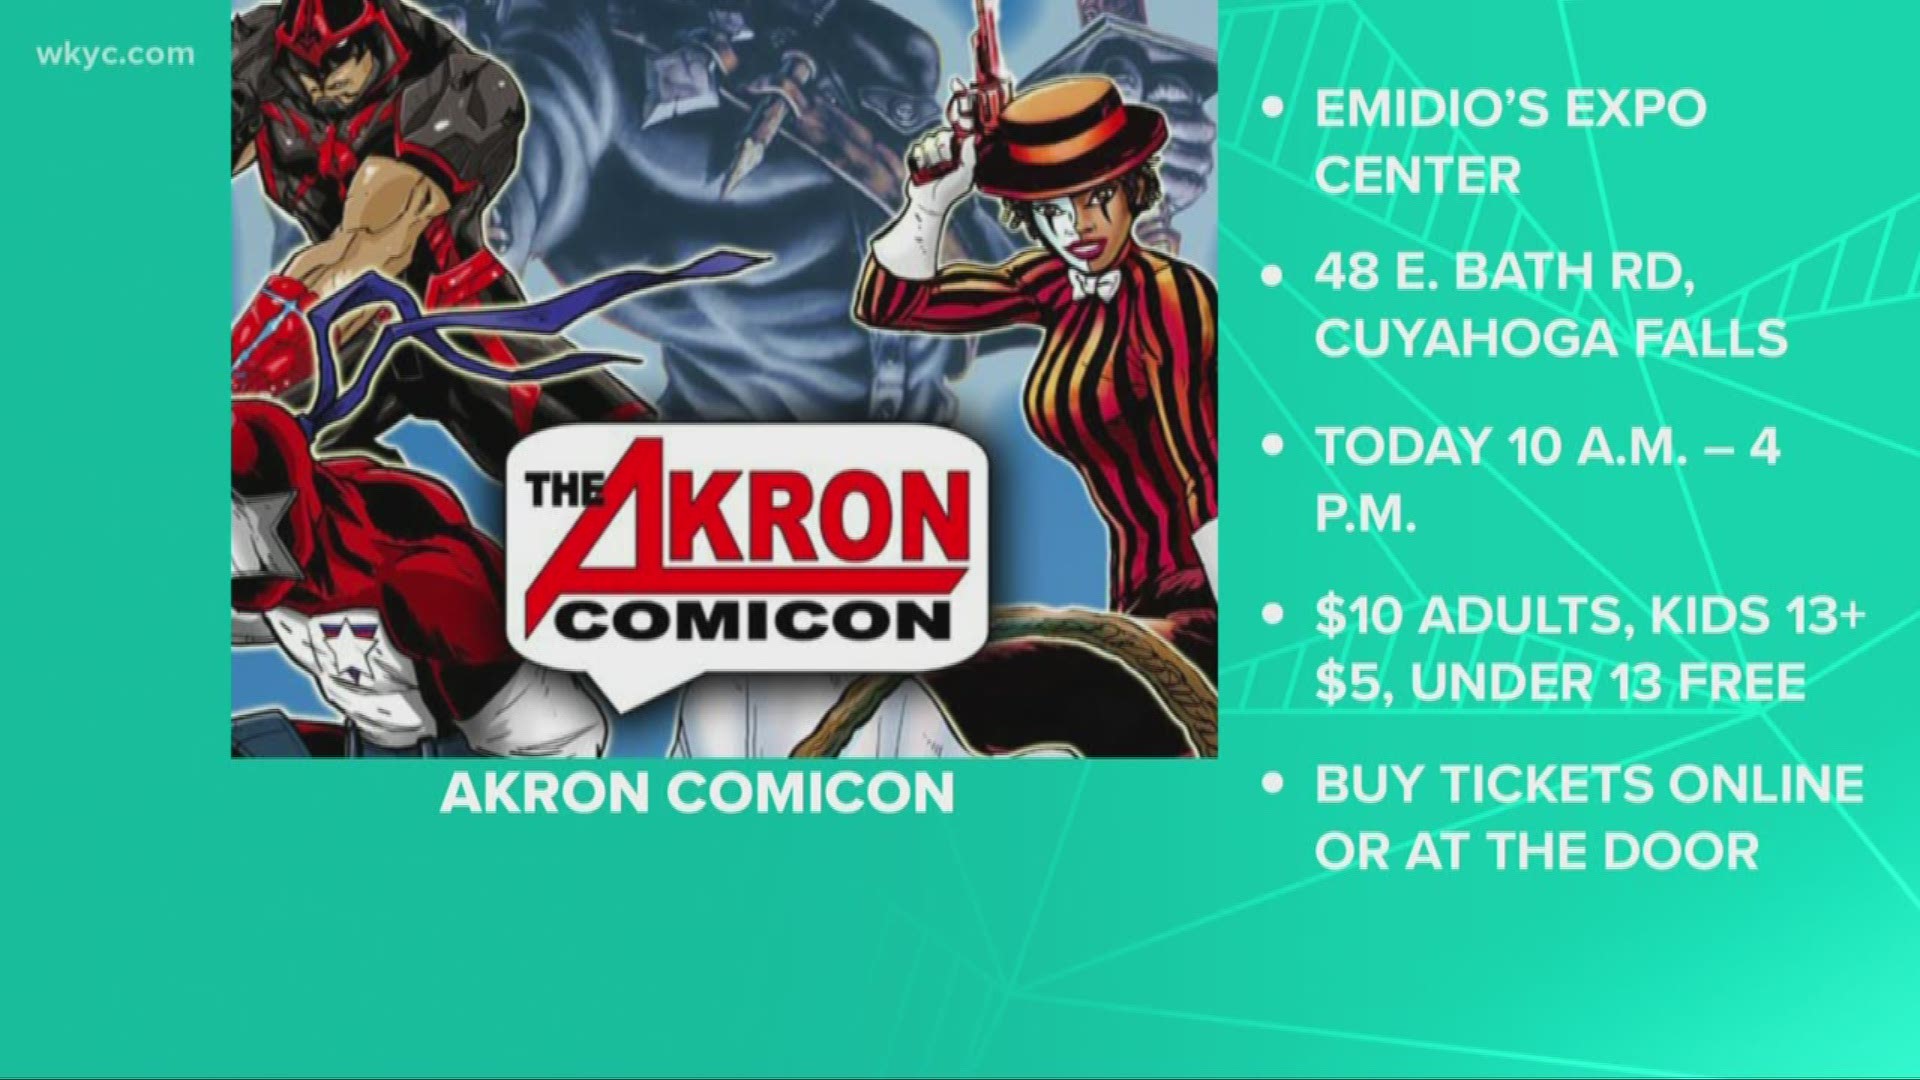 The Akron Comicon